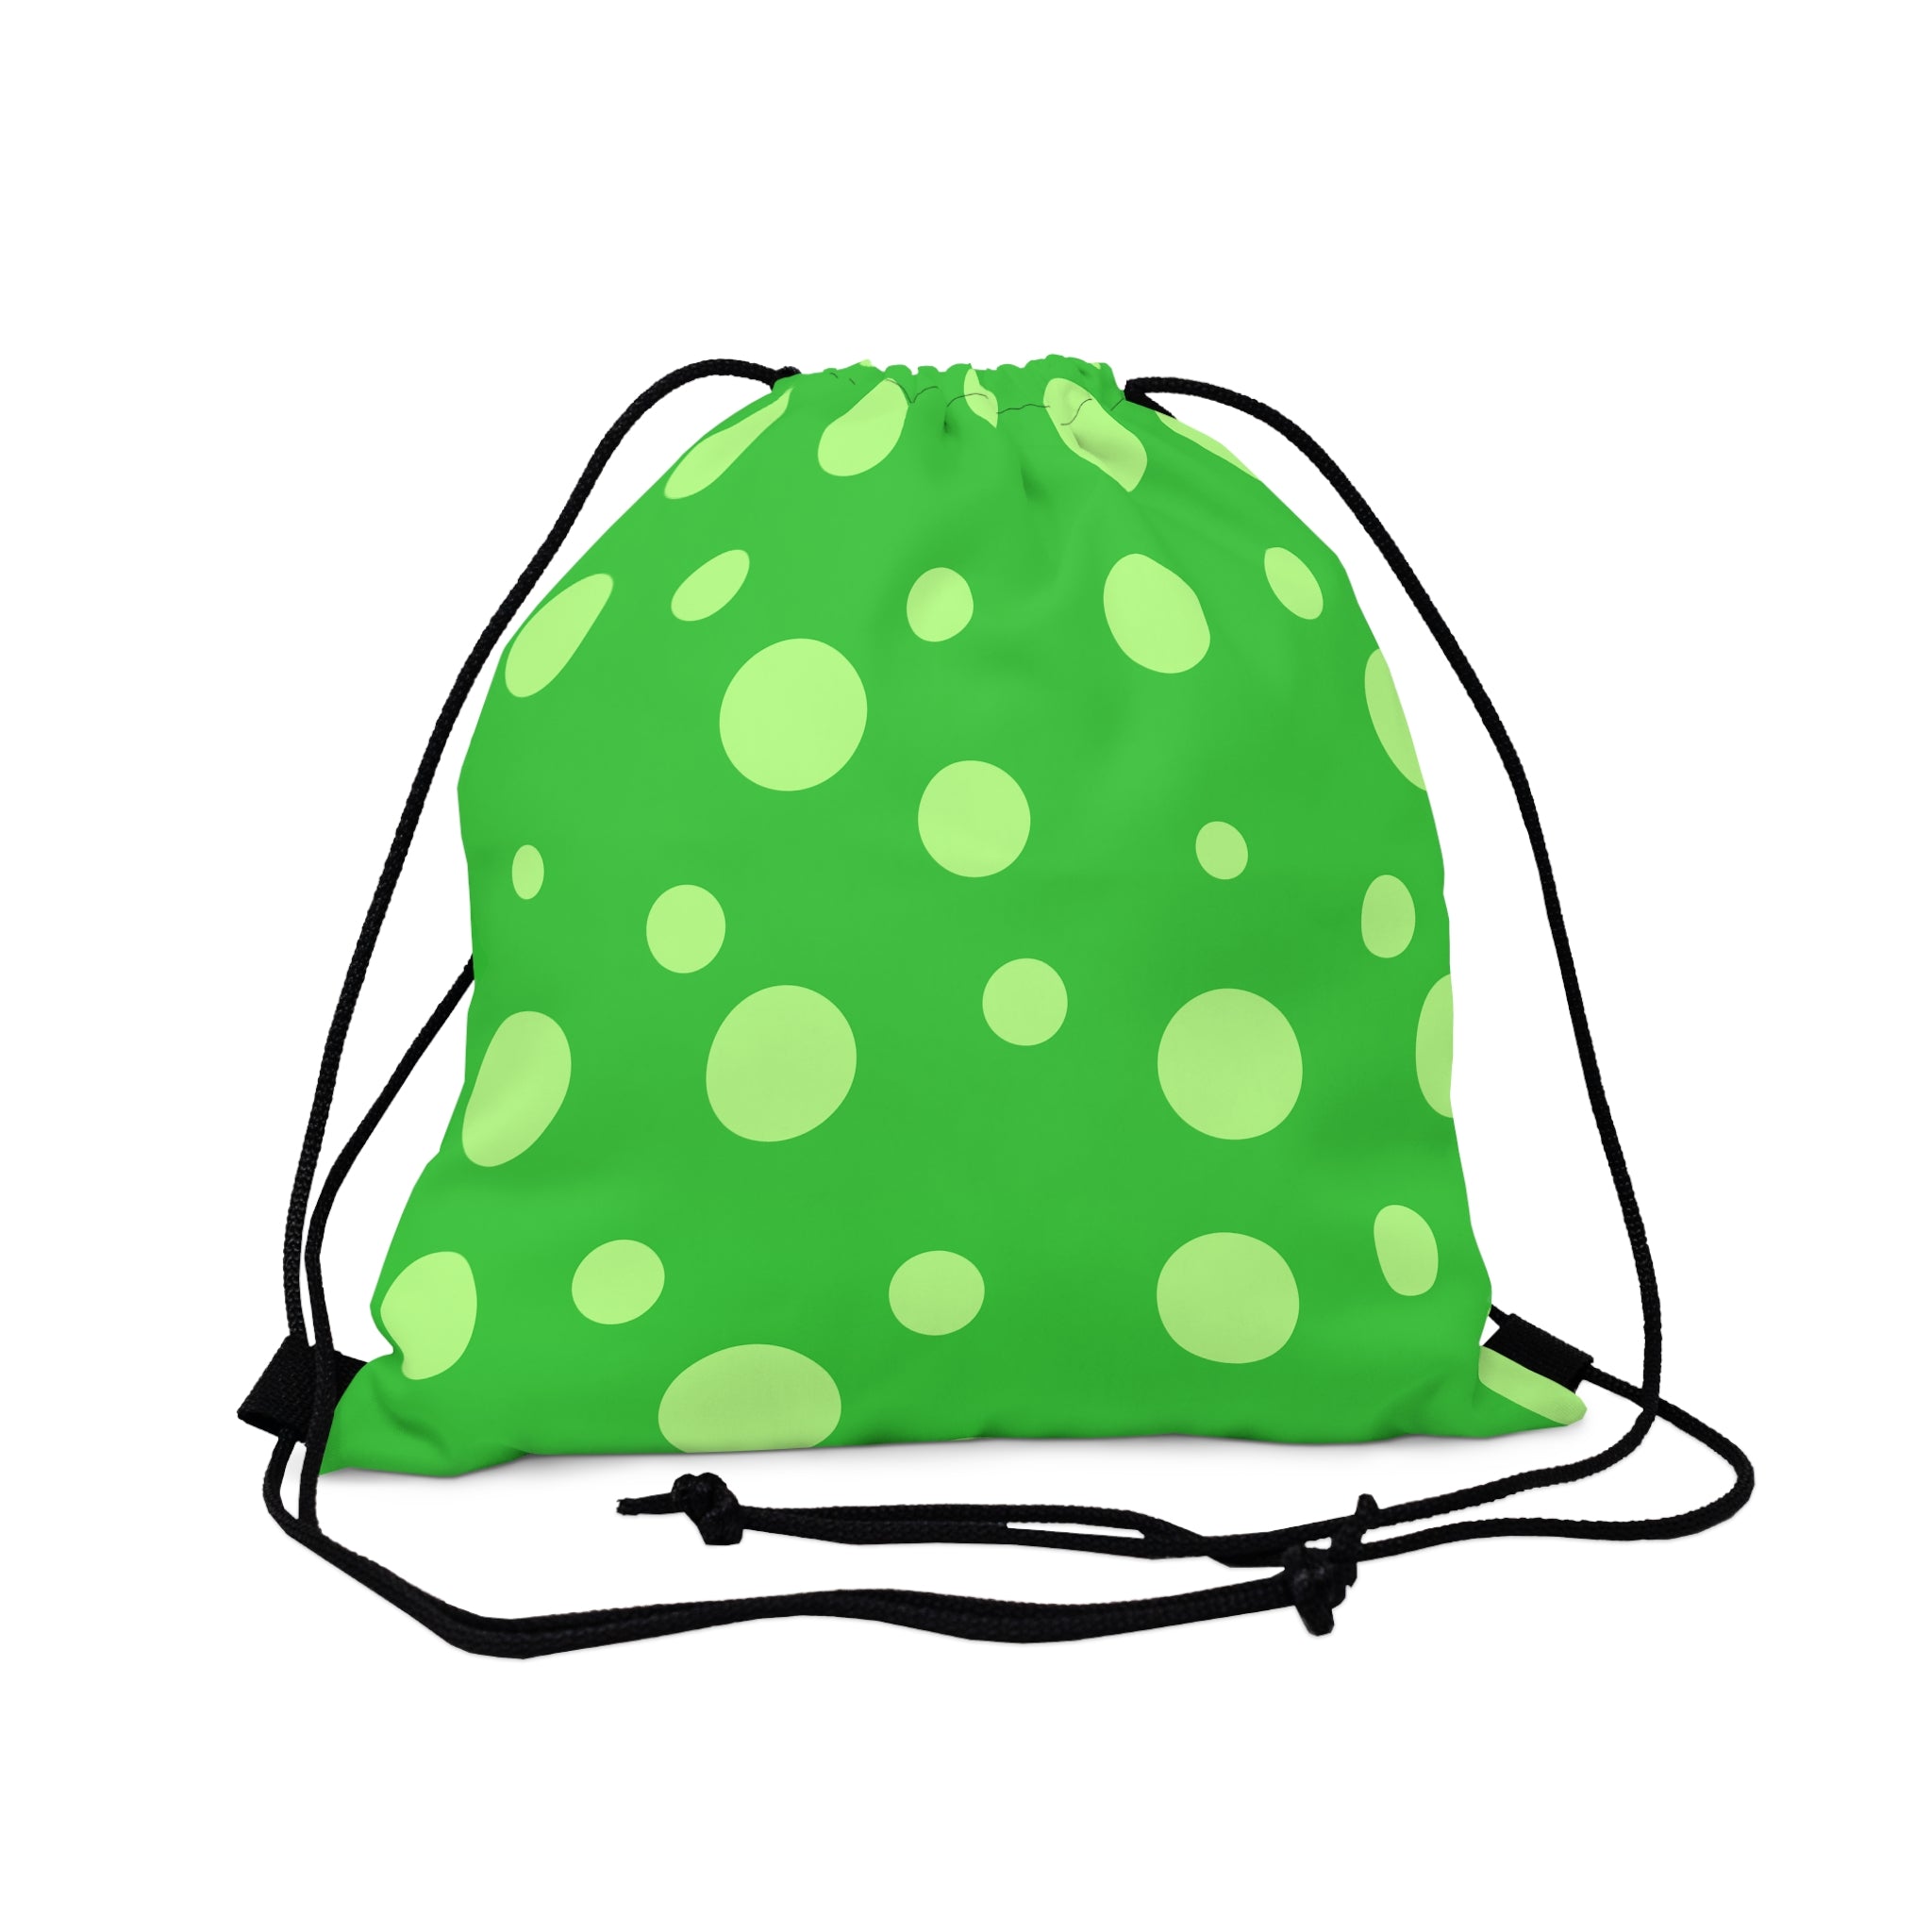 green drawstring bag with a lighter green polka dot design